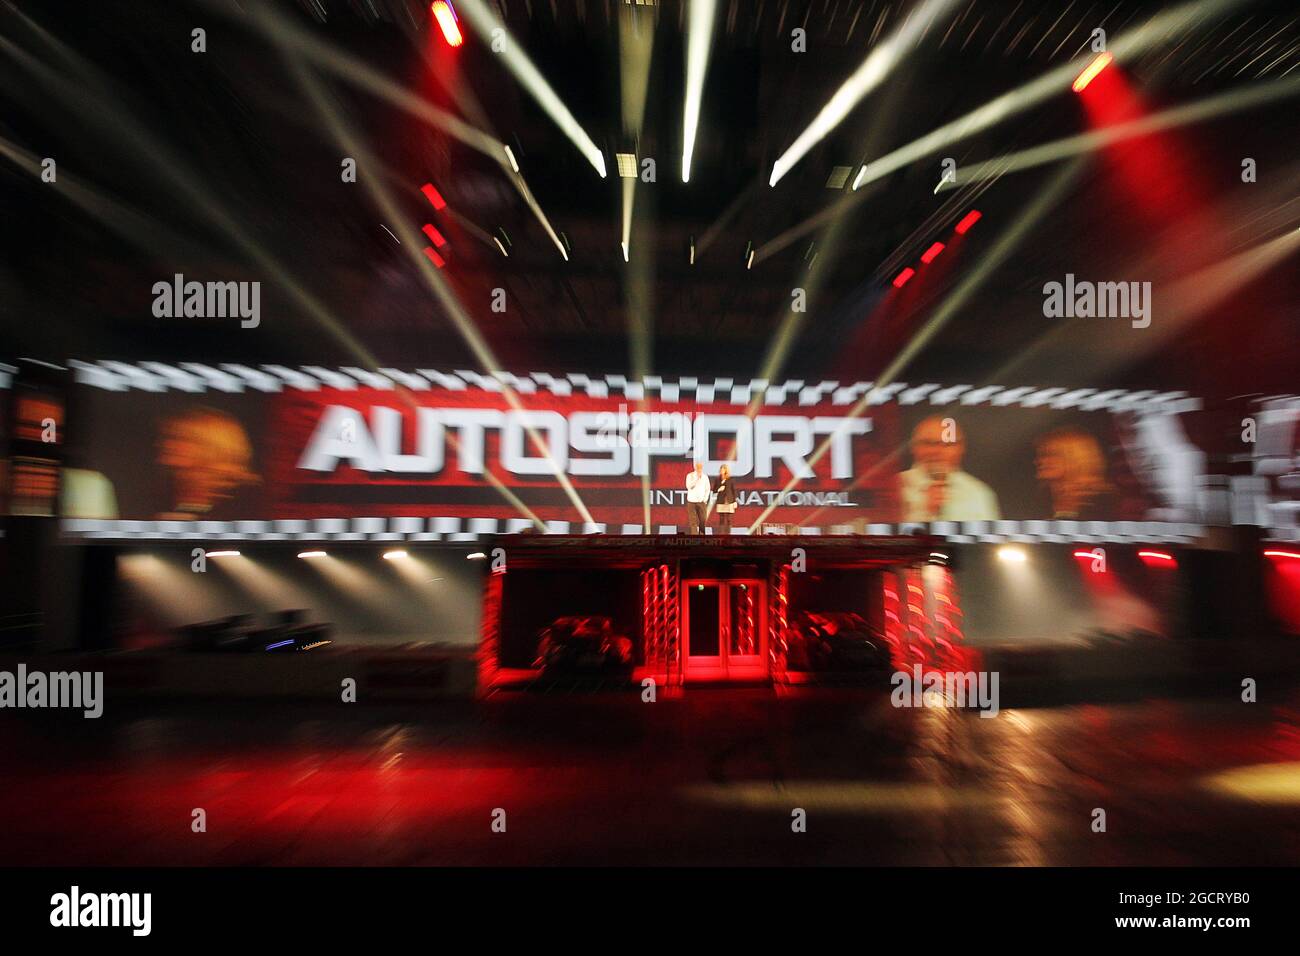 Die Live Action Arena. Autosport International, Samstag 12. Januar 2013. National Exhibition Centre, Birmingham, England. Stockfoto